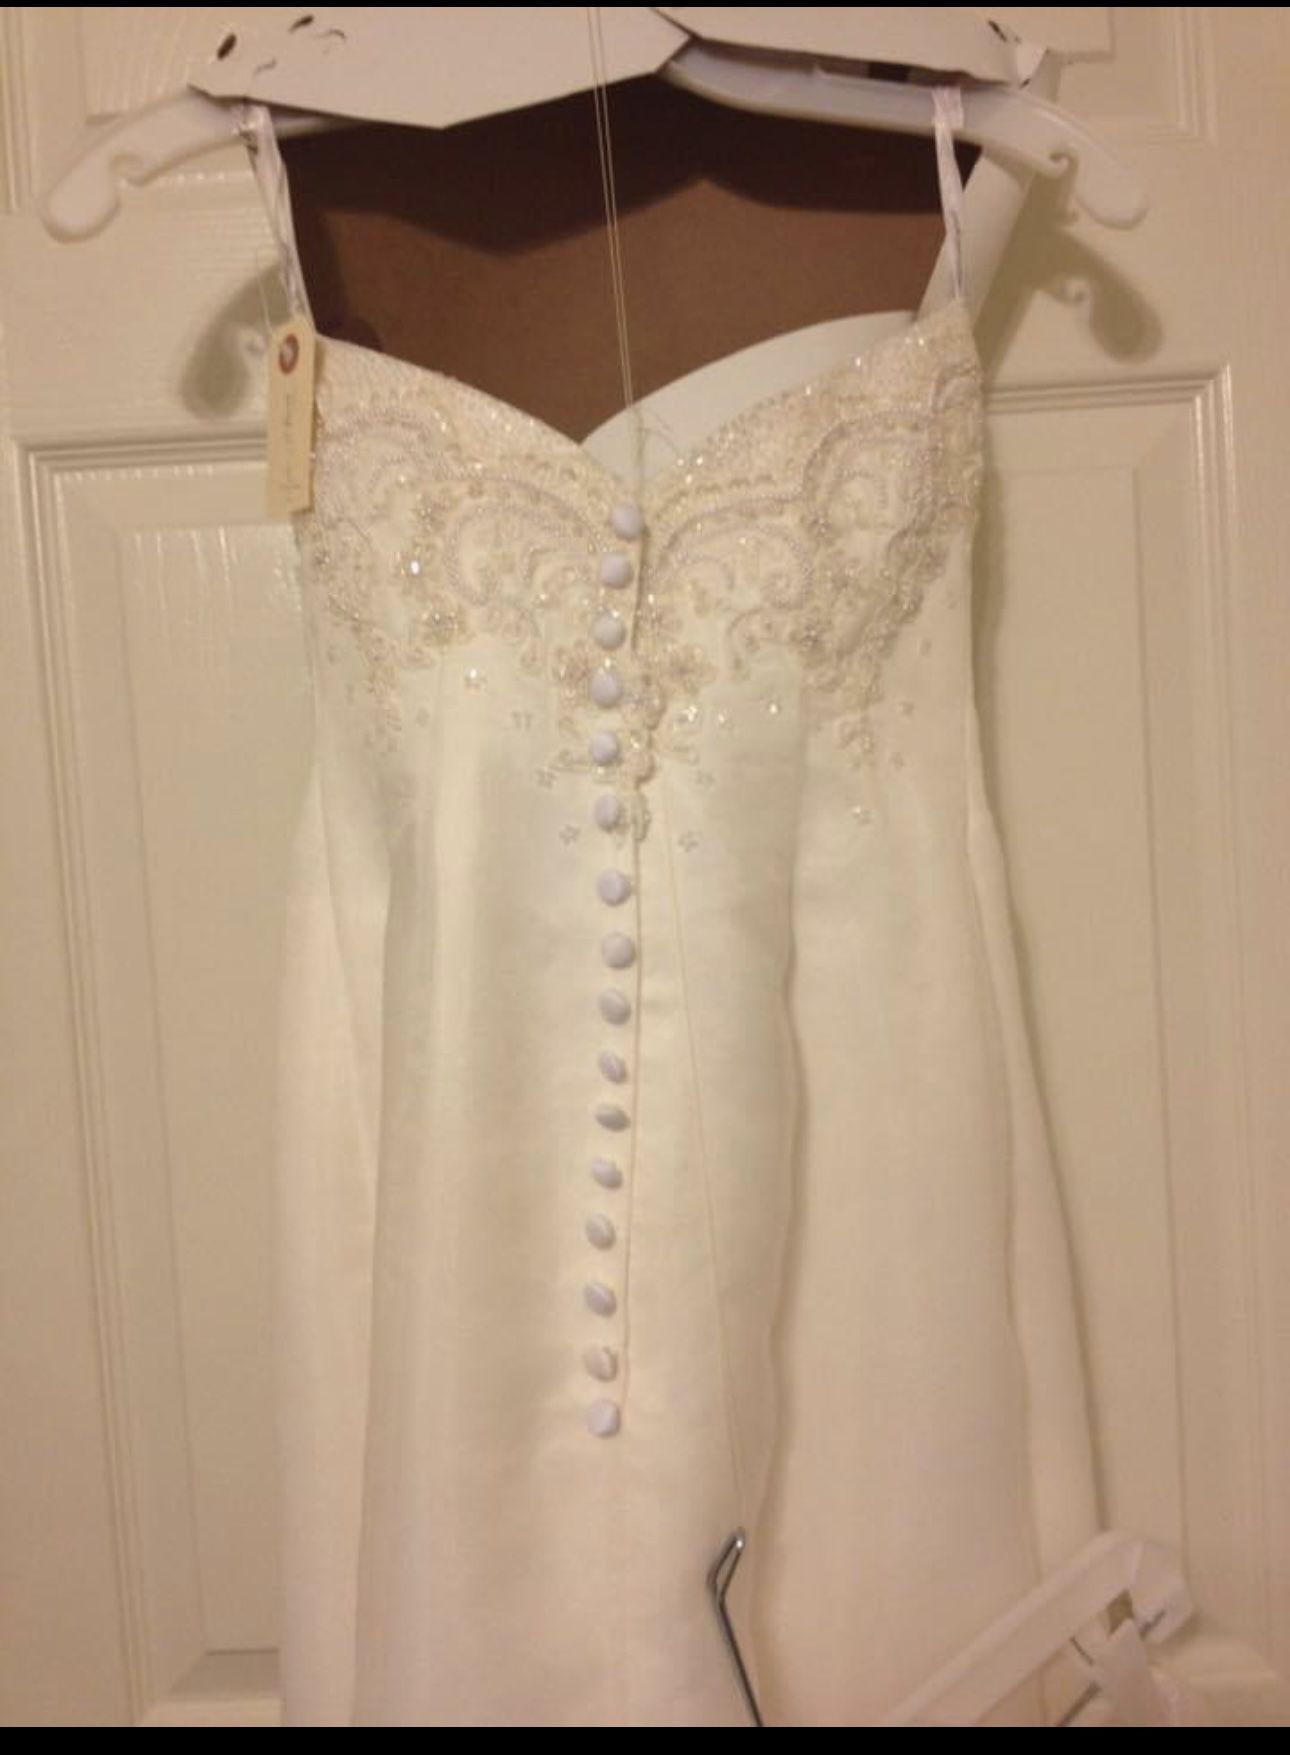 Davids Bridal Ivory Wedding Dress